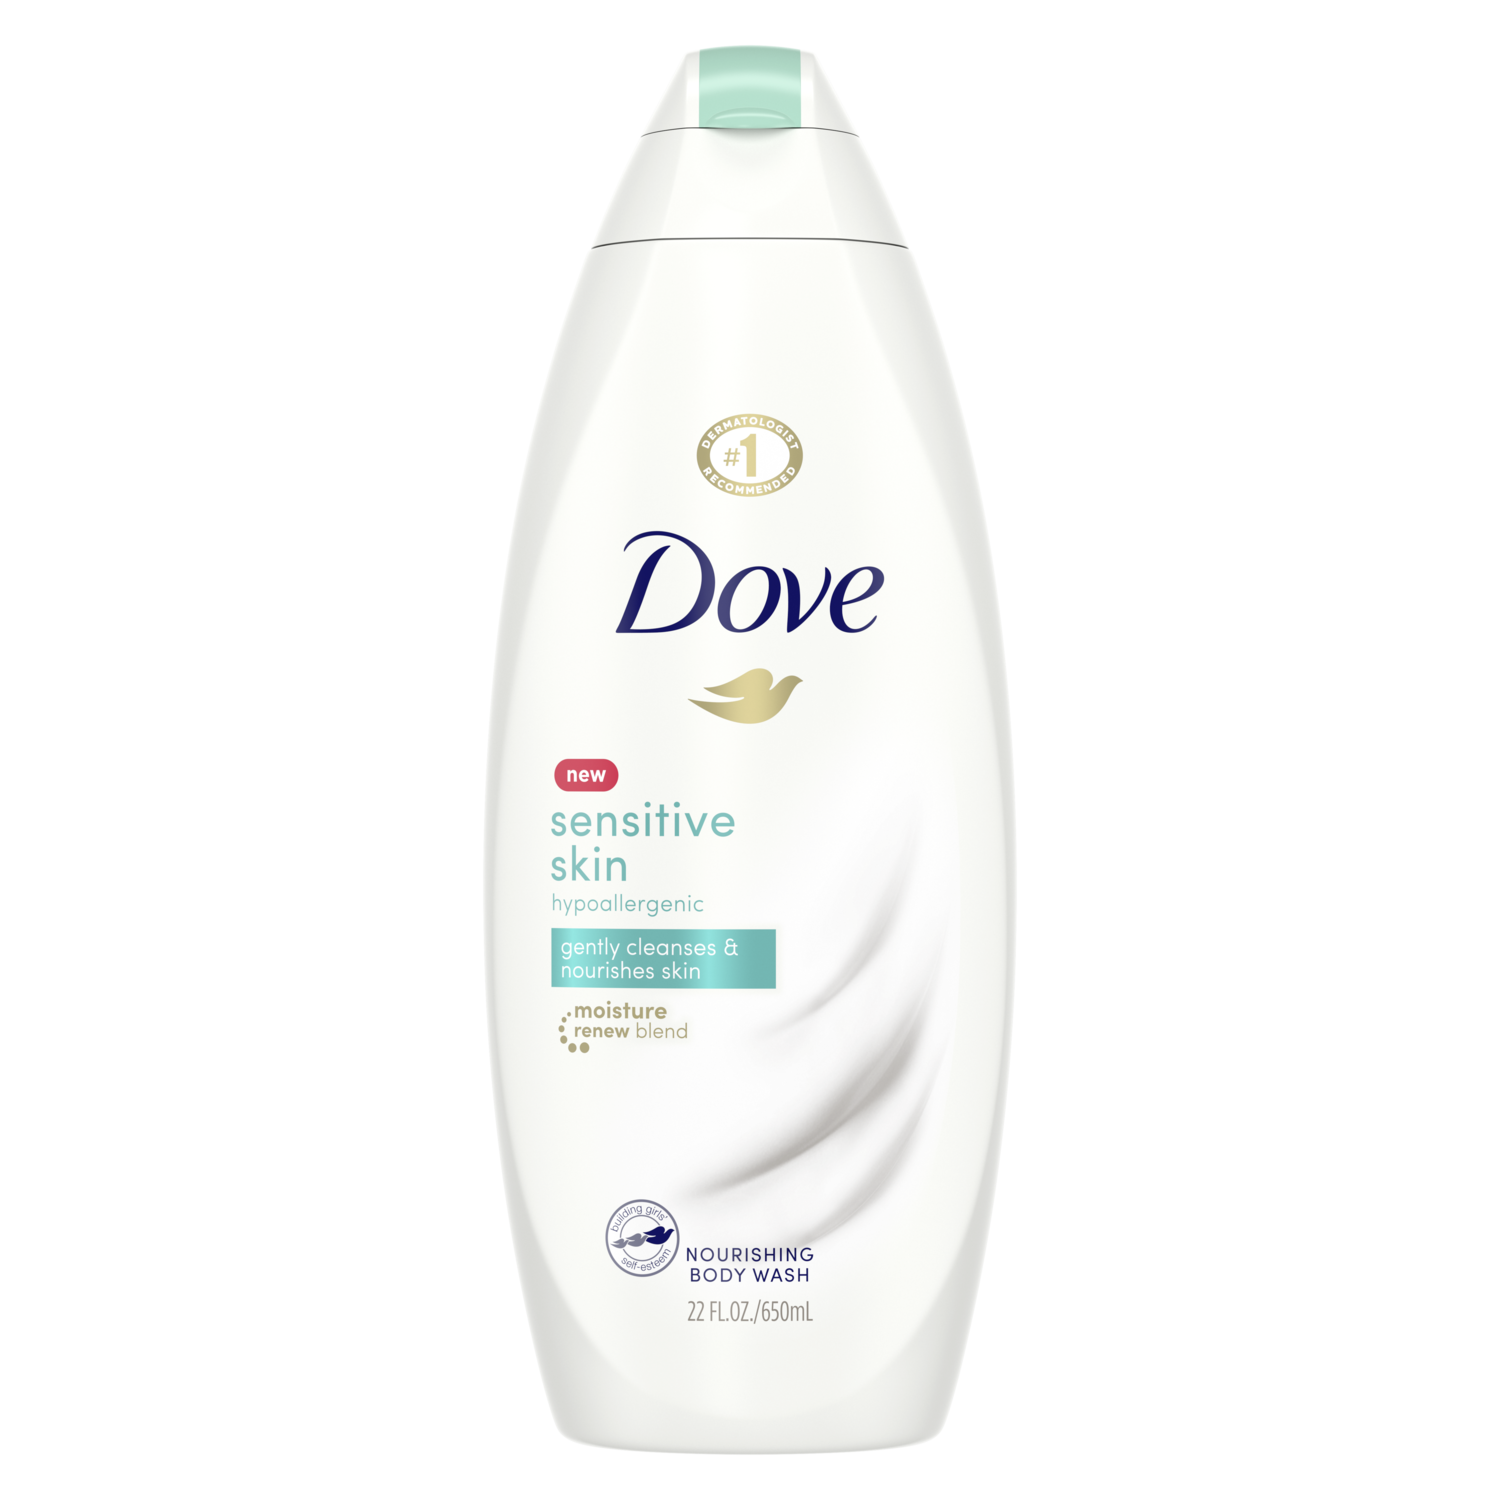 Dove Beauty + Dove Sensitive Skin Body Wash